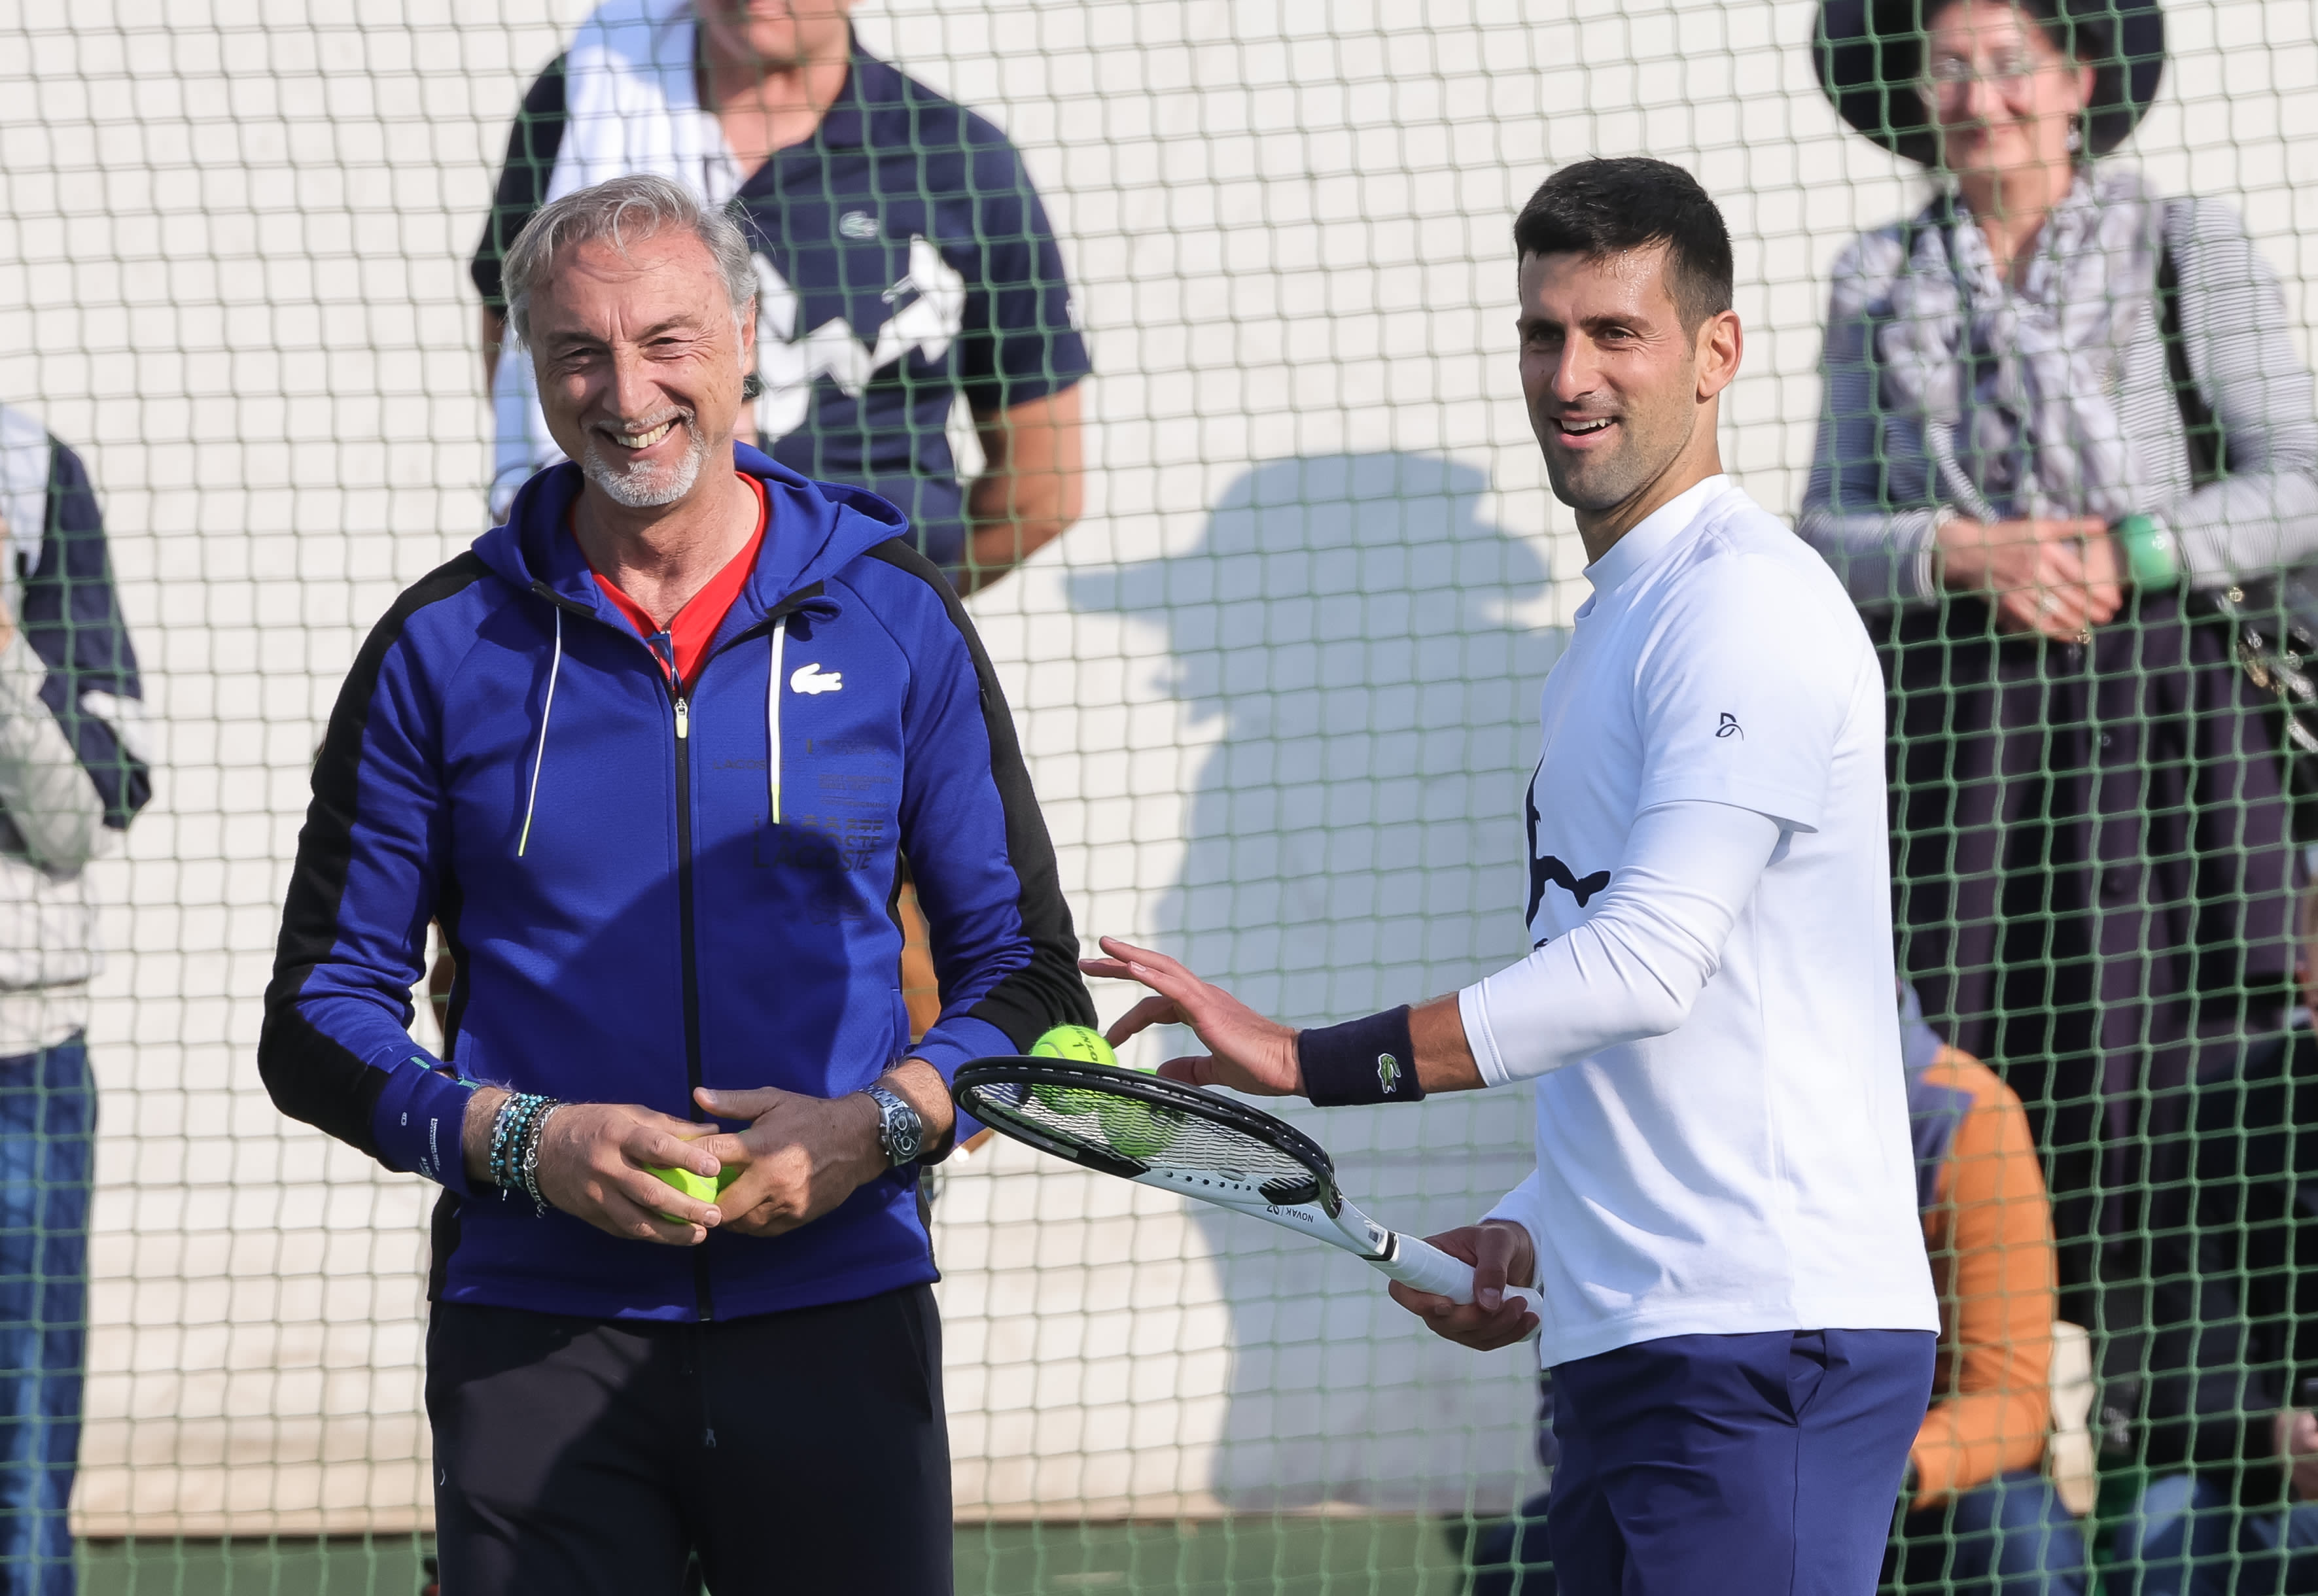 Novak Djokovic thanks fitness coach Marco Panichi for “amazing” years after pair splits | Tennis.com